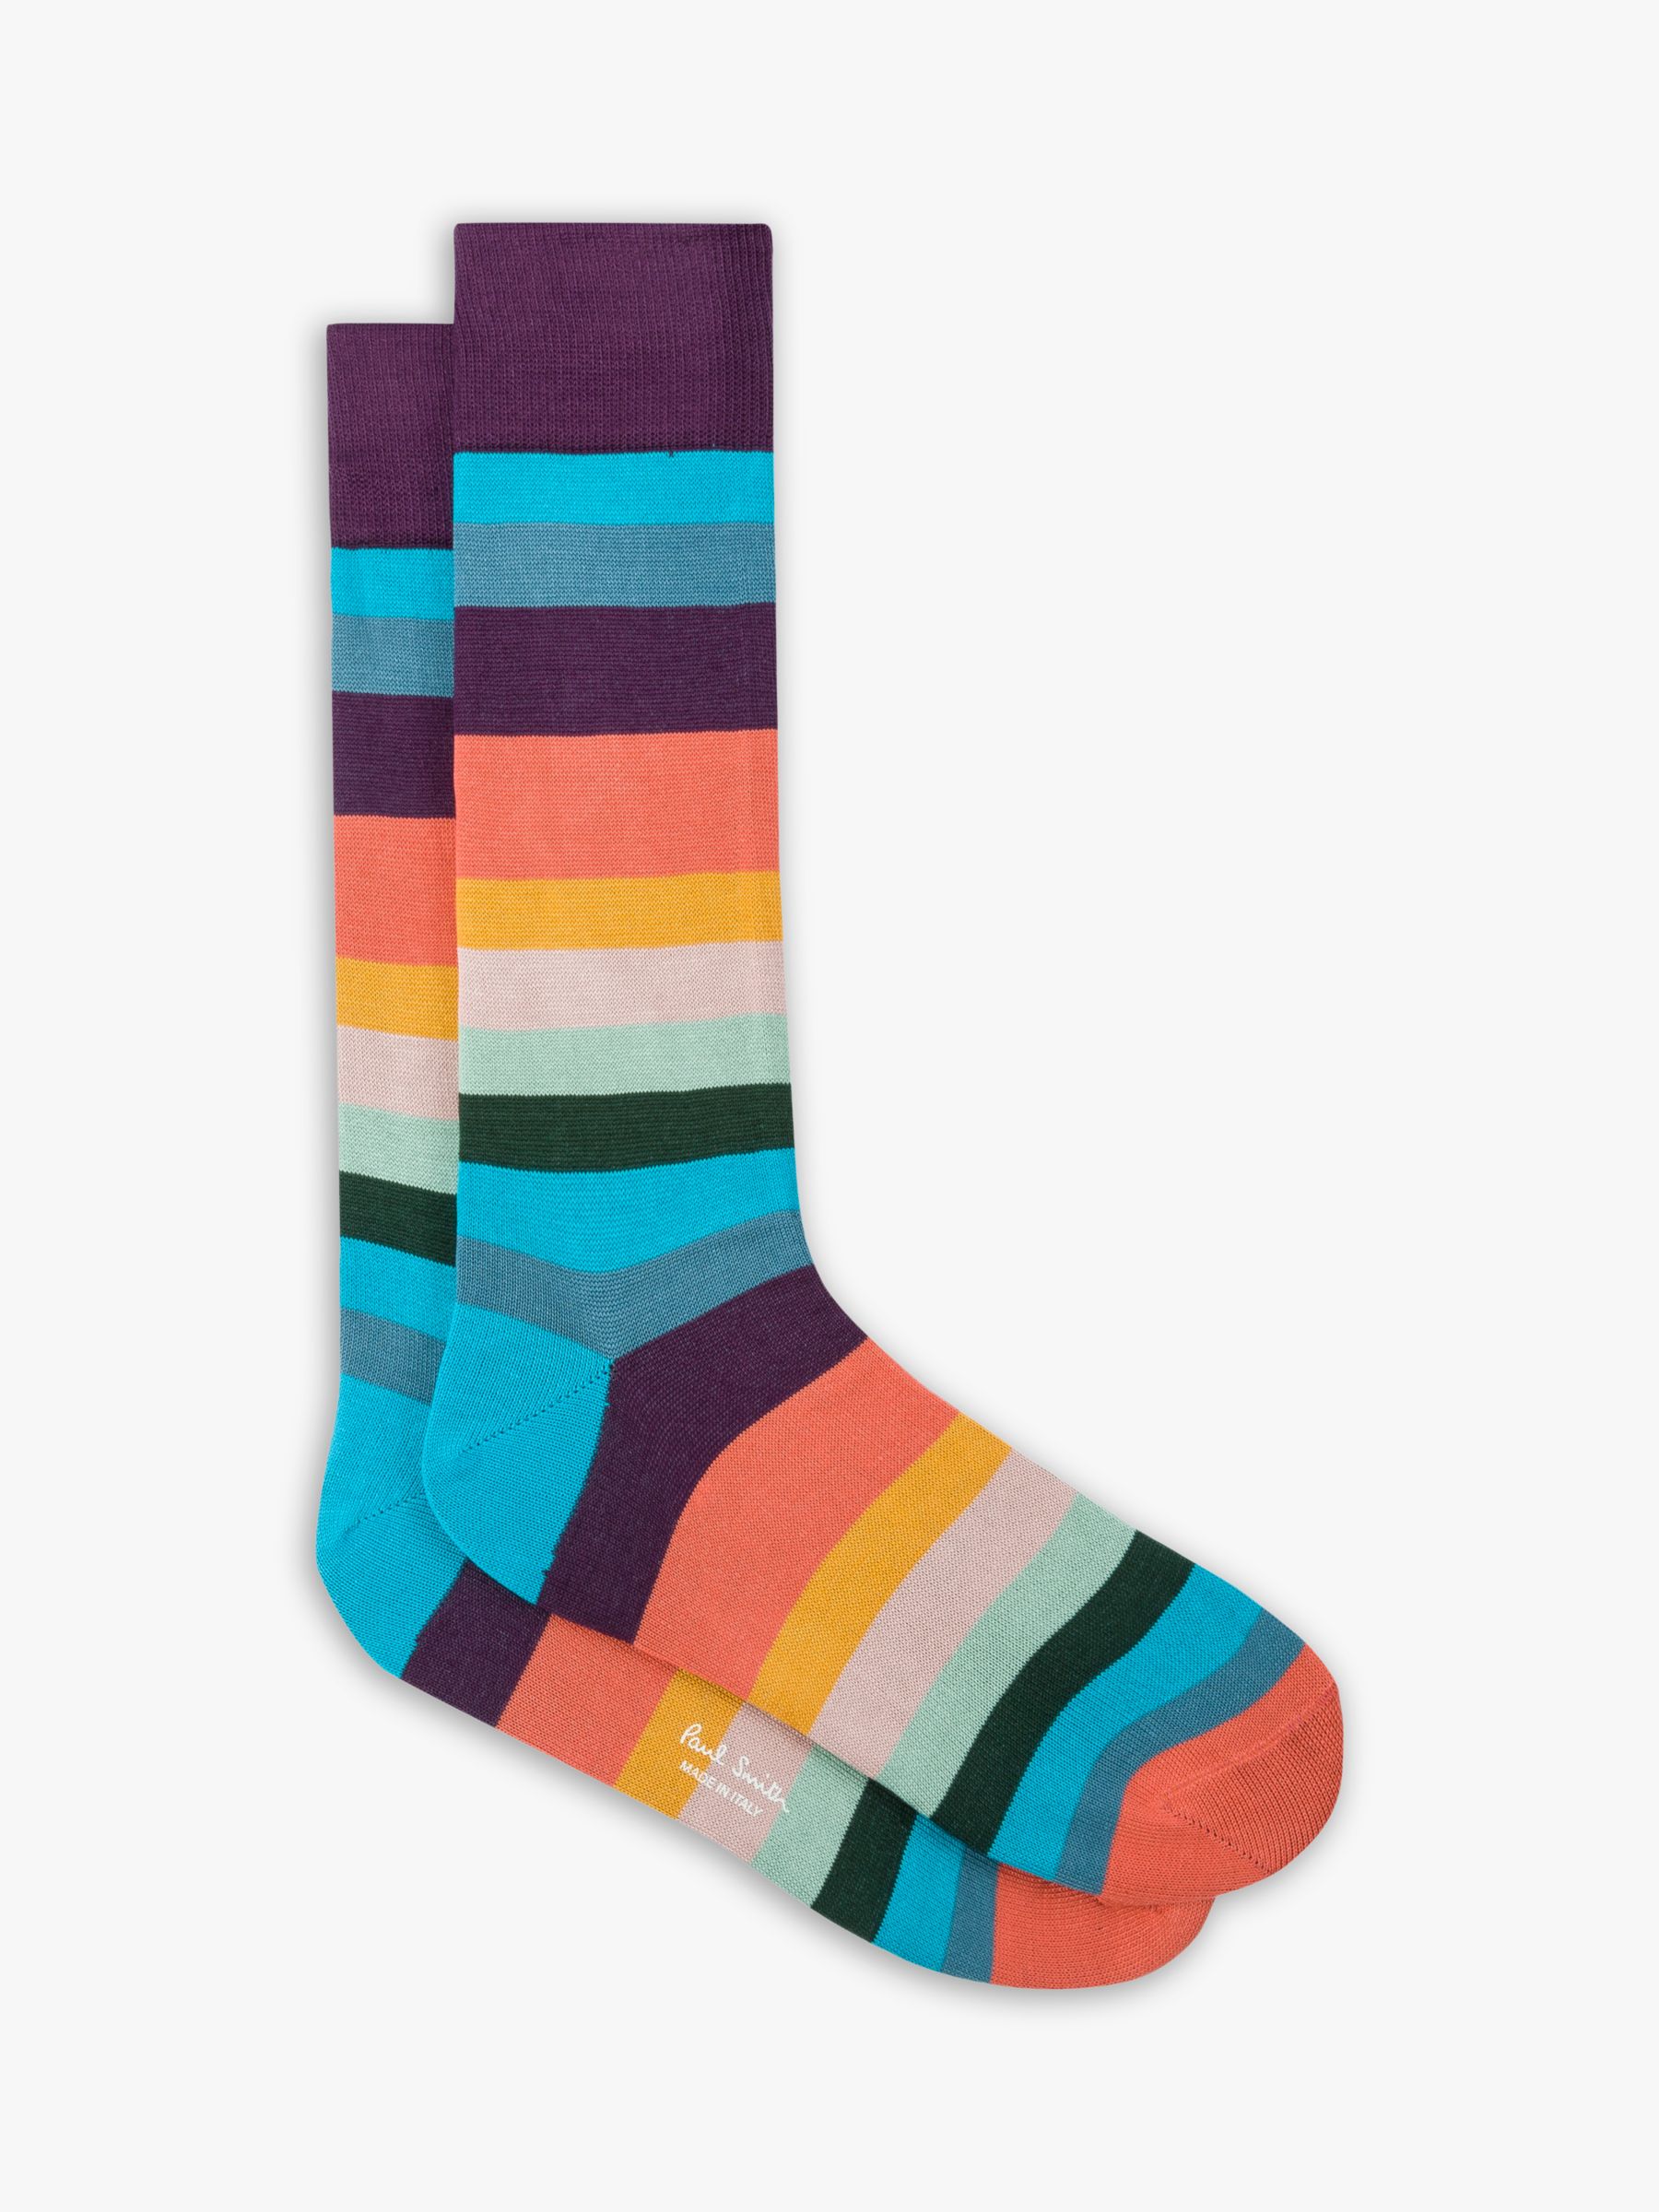 Paul Smith Artist Stripe Socks, One Size, Multi at John Lewis & Partners